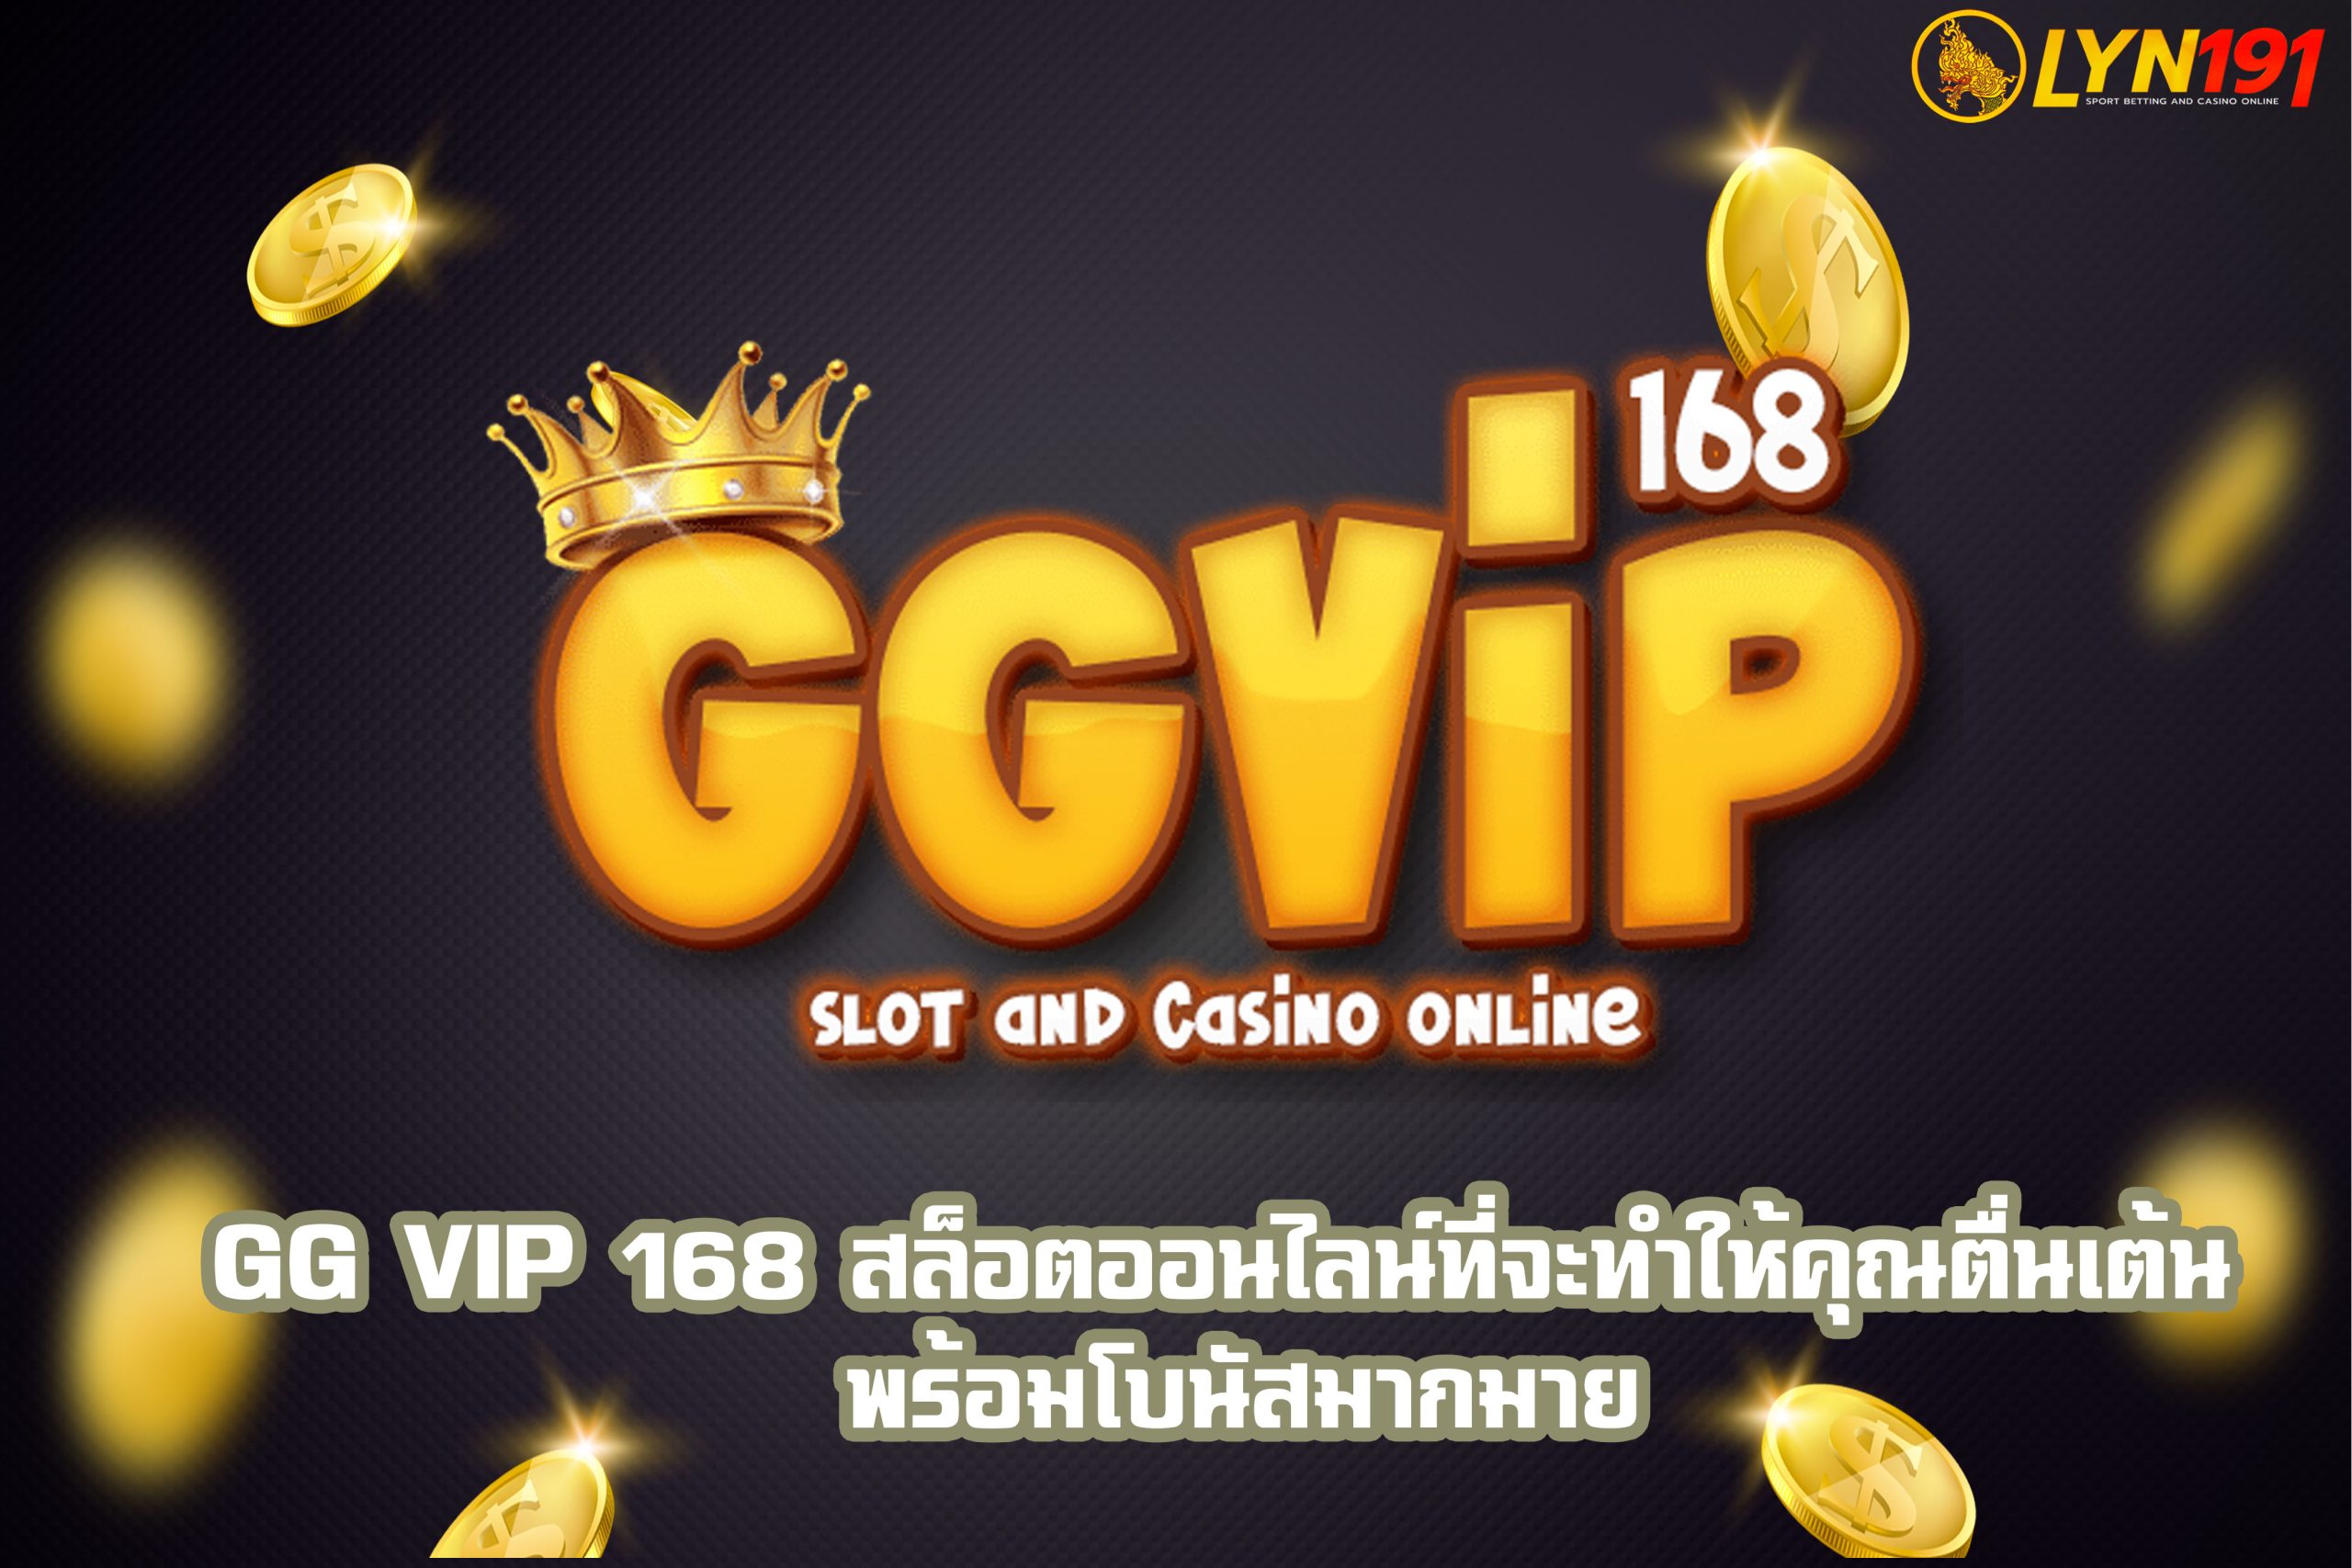 GG VIP 168 สล็อตออนไลน์ที่จะทำให้คุณตื่นเต้น พร้อมโบนัสมากมาย